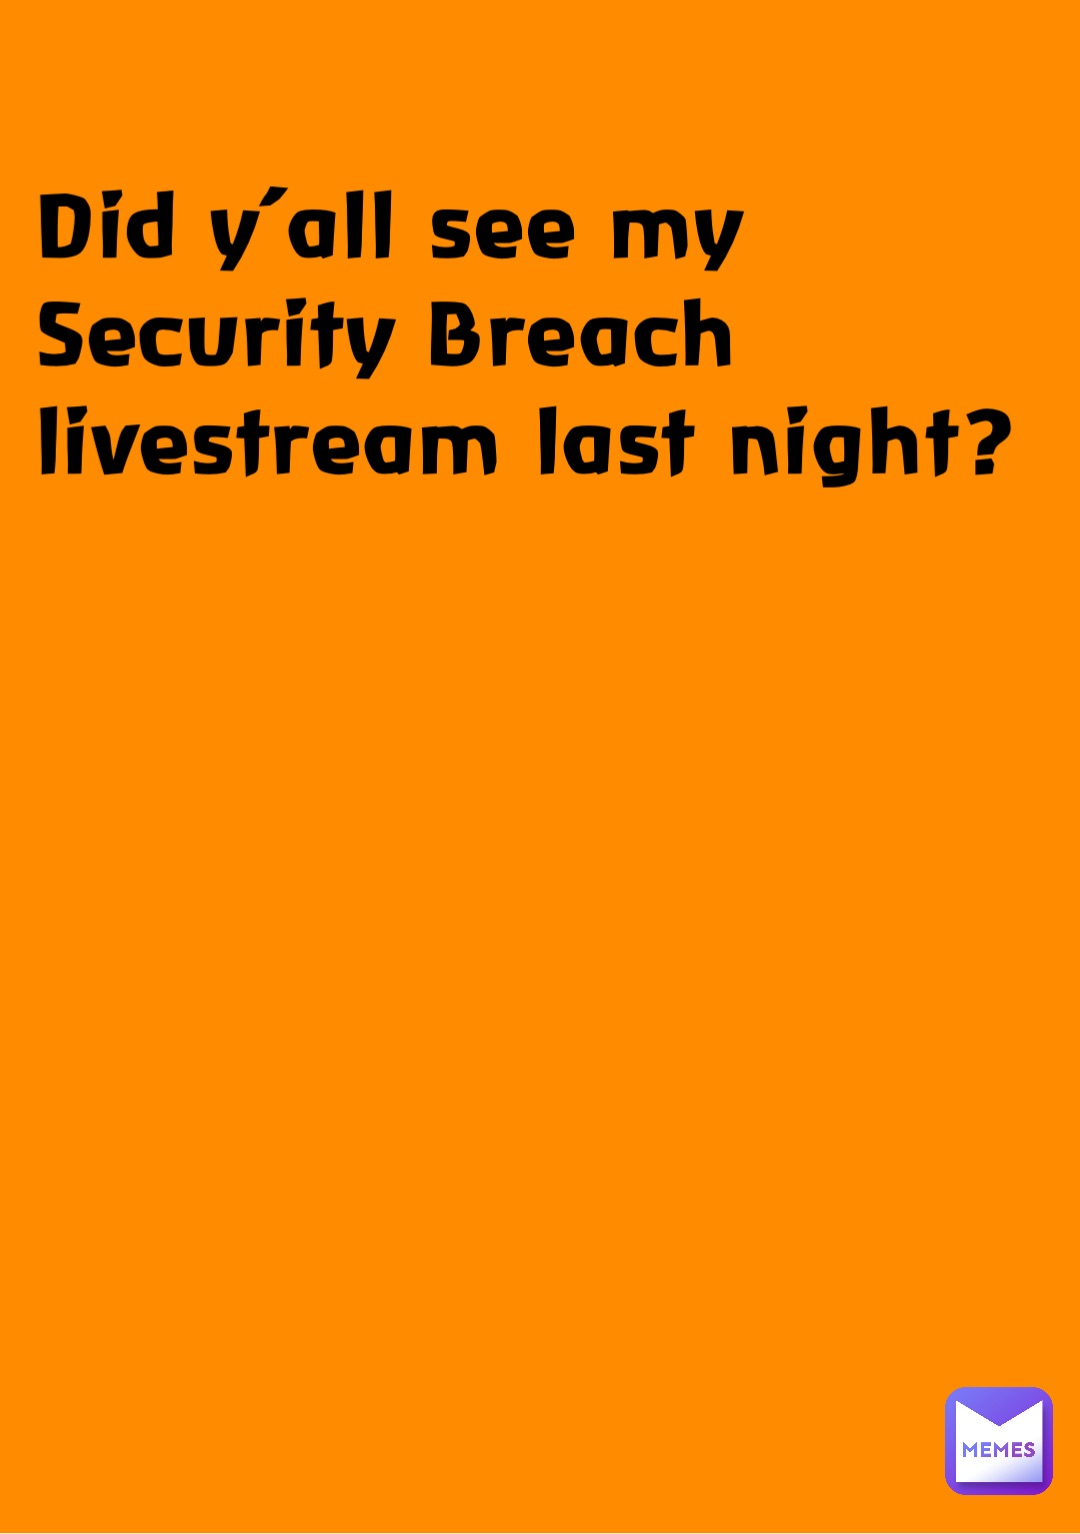 Did y’all see my Security Breach livestream last night?